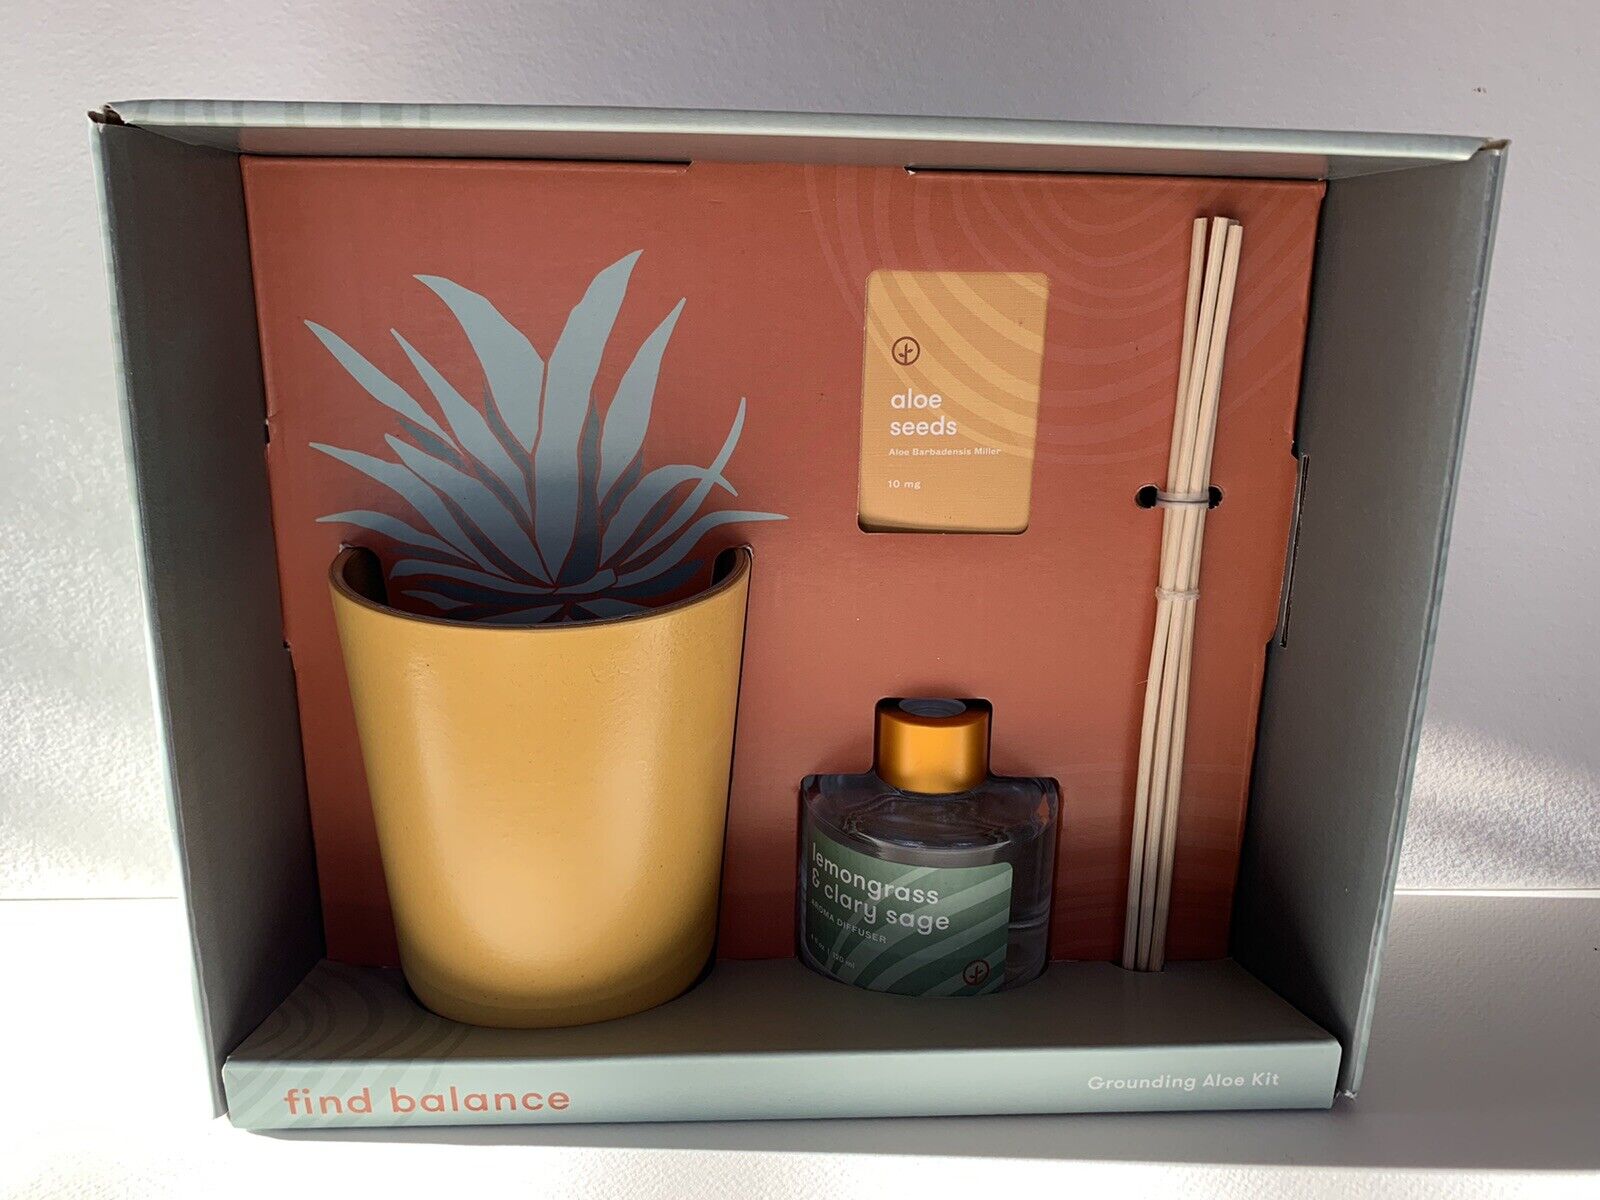 Modern Sprout Live Well Gift Set Grounding Aloe Kit & Lemongrass/Sage Diffuser